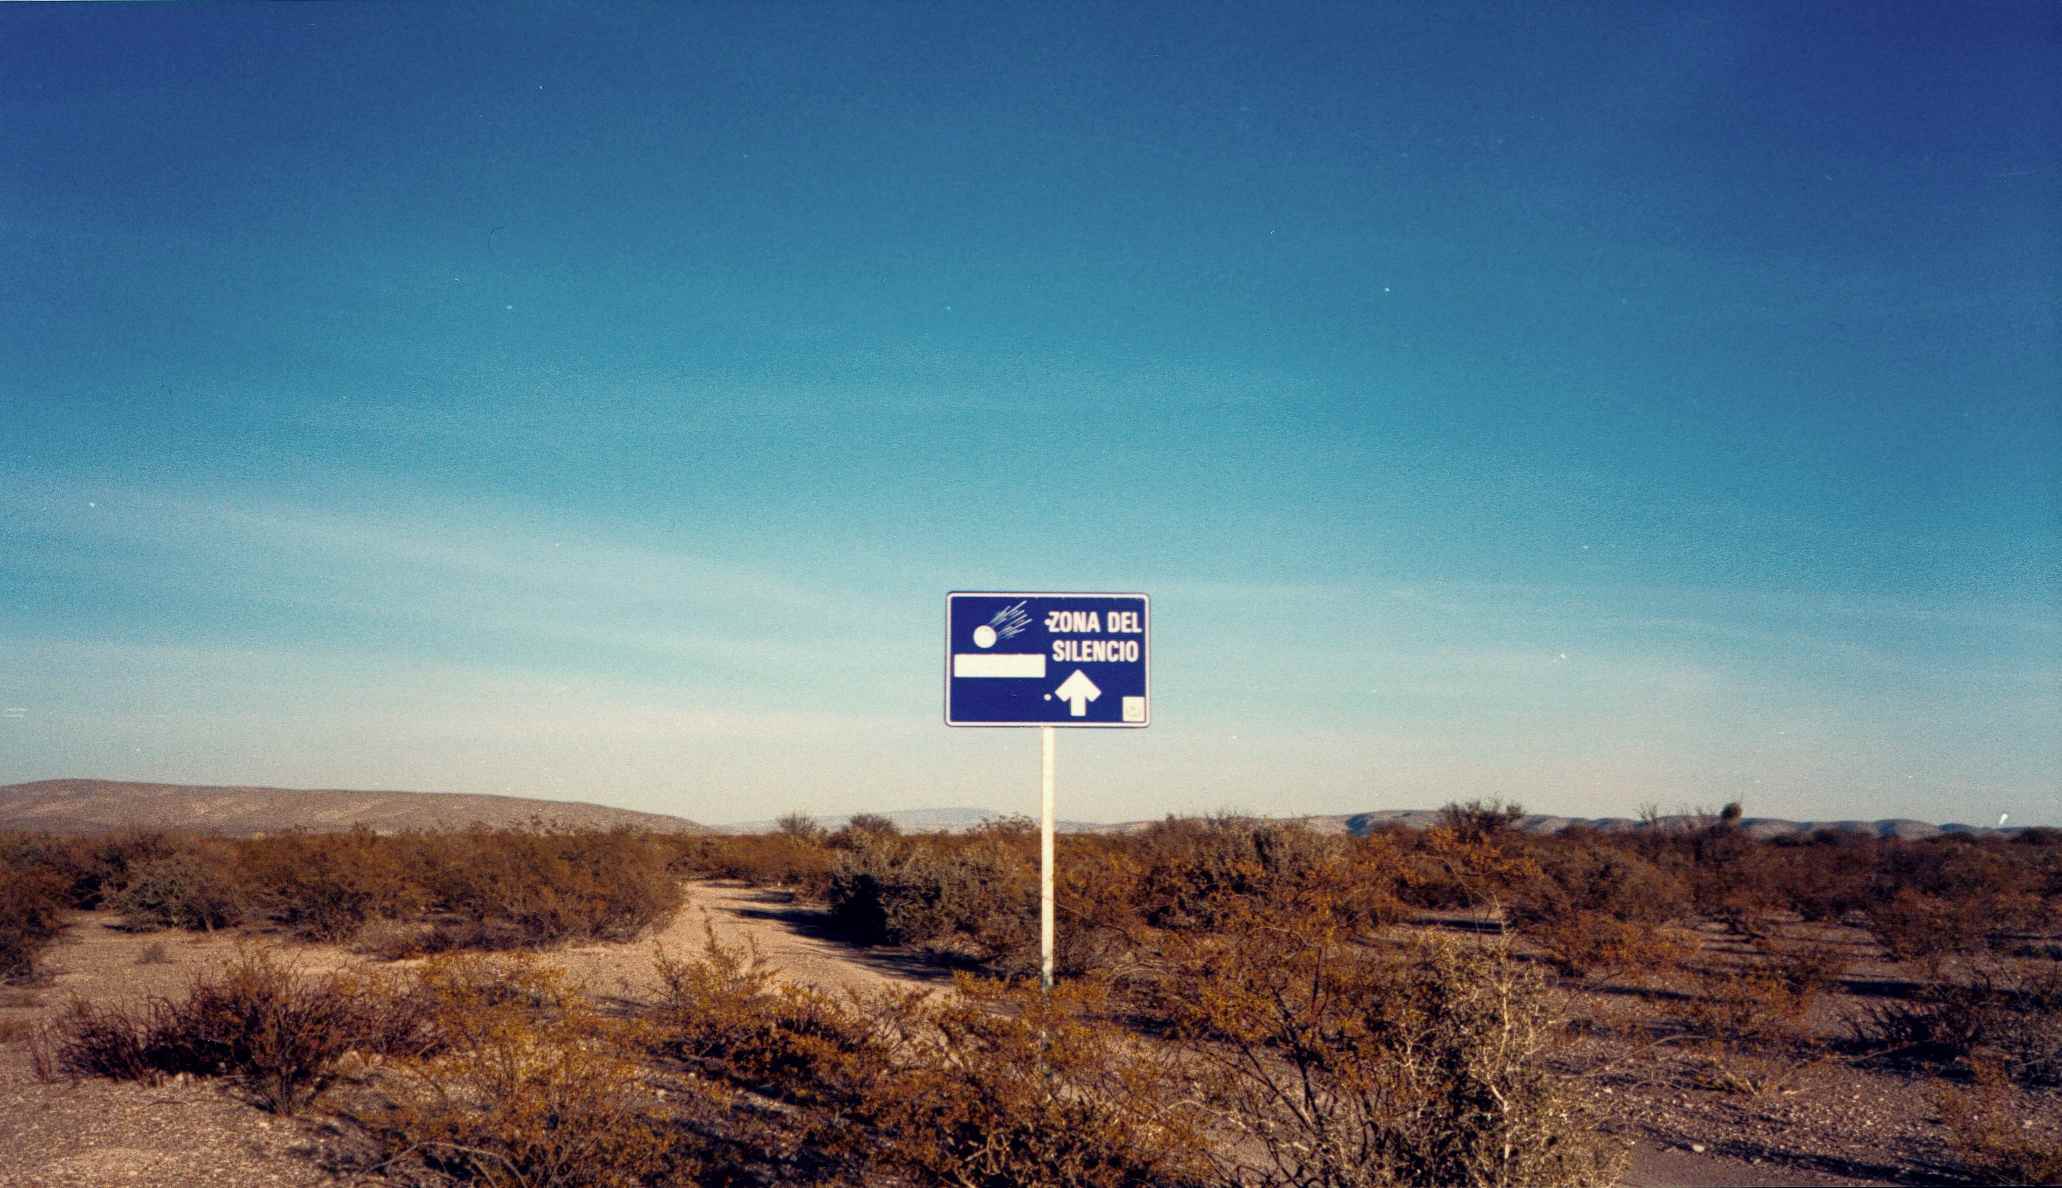 Zone Of Silence, Zona del Silencio, Chihuahua-woestijn, Noord-Mexico